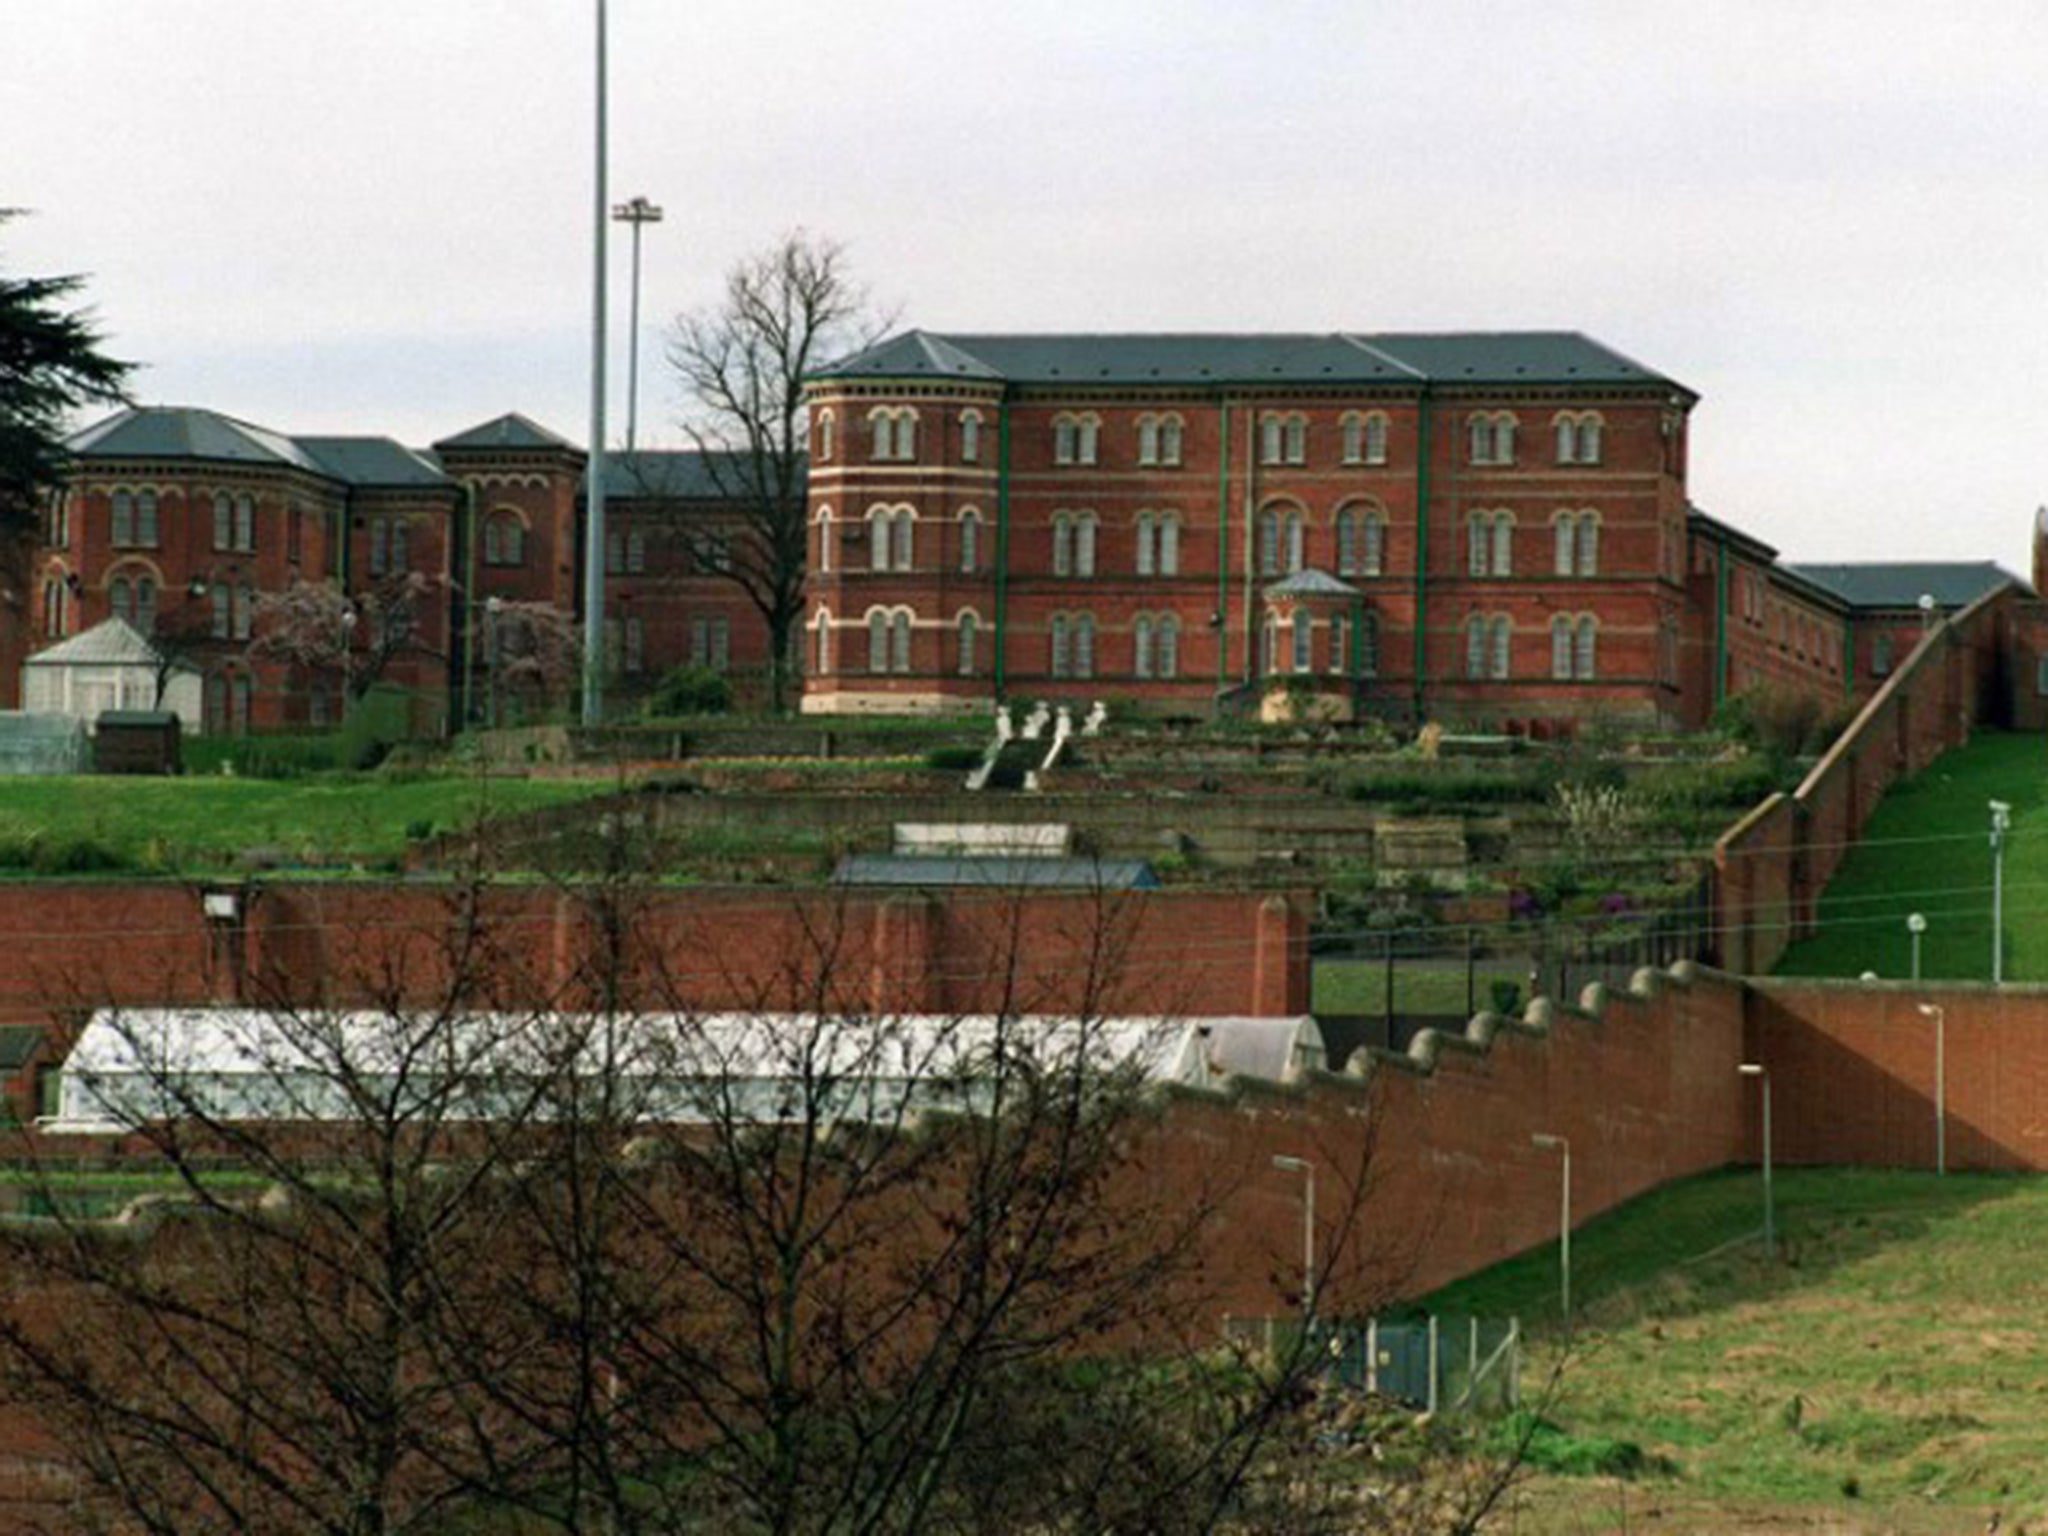 Broadmoor is one of the West London Mental Health NHS Trust’s 32 sites